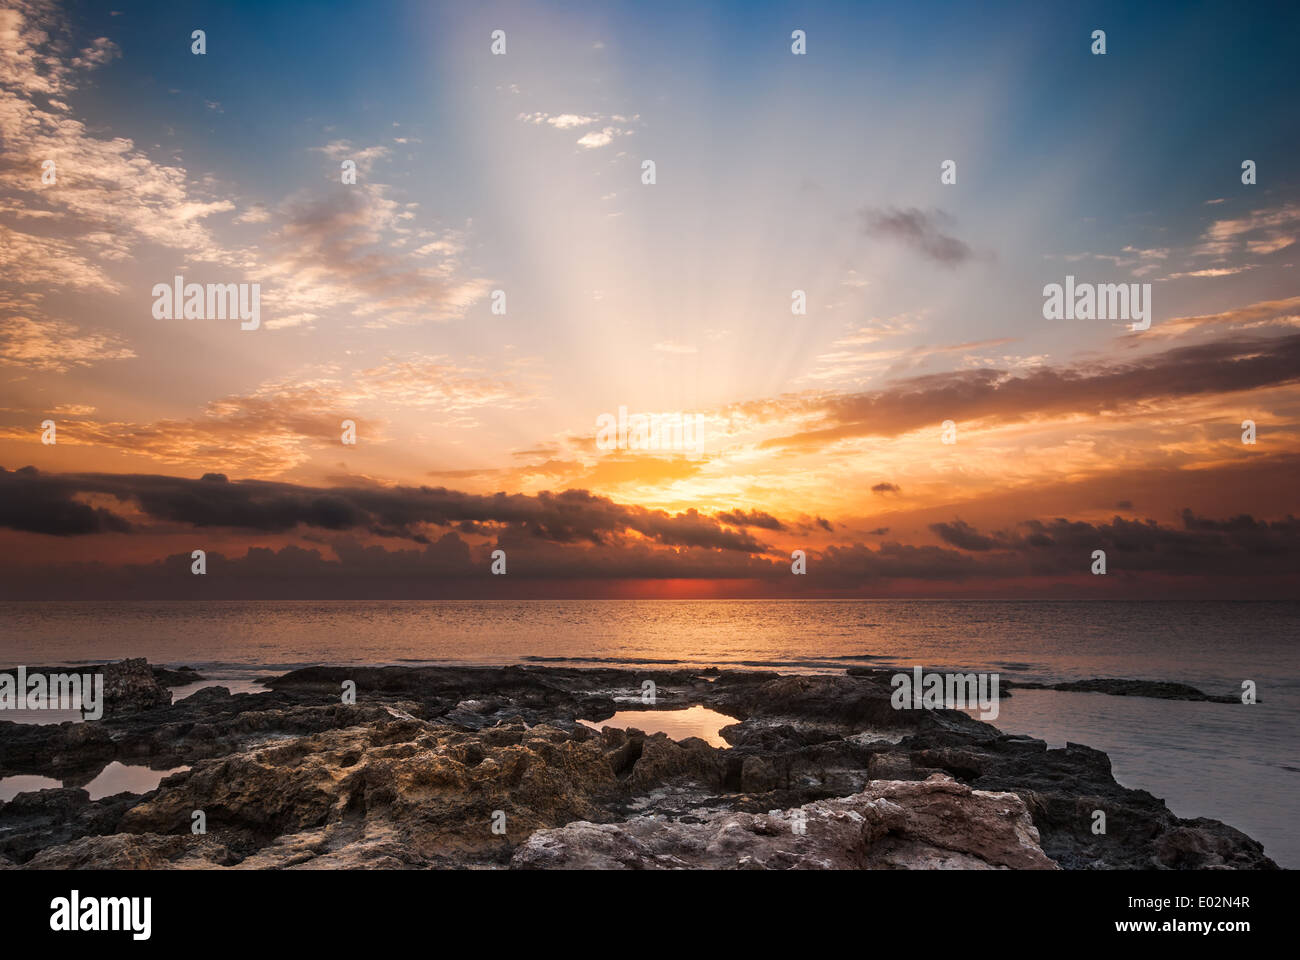 Felsigen Strand und Himmel mit Sonnenstrahlen am Morgen bewölkt Stockfoto